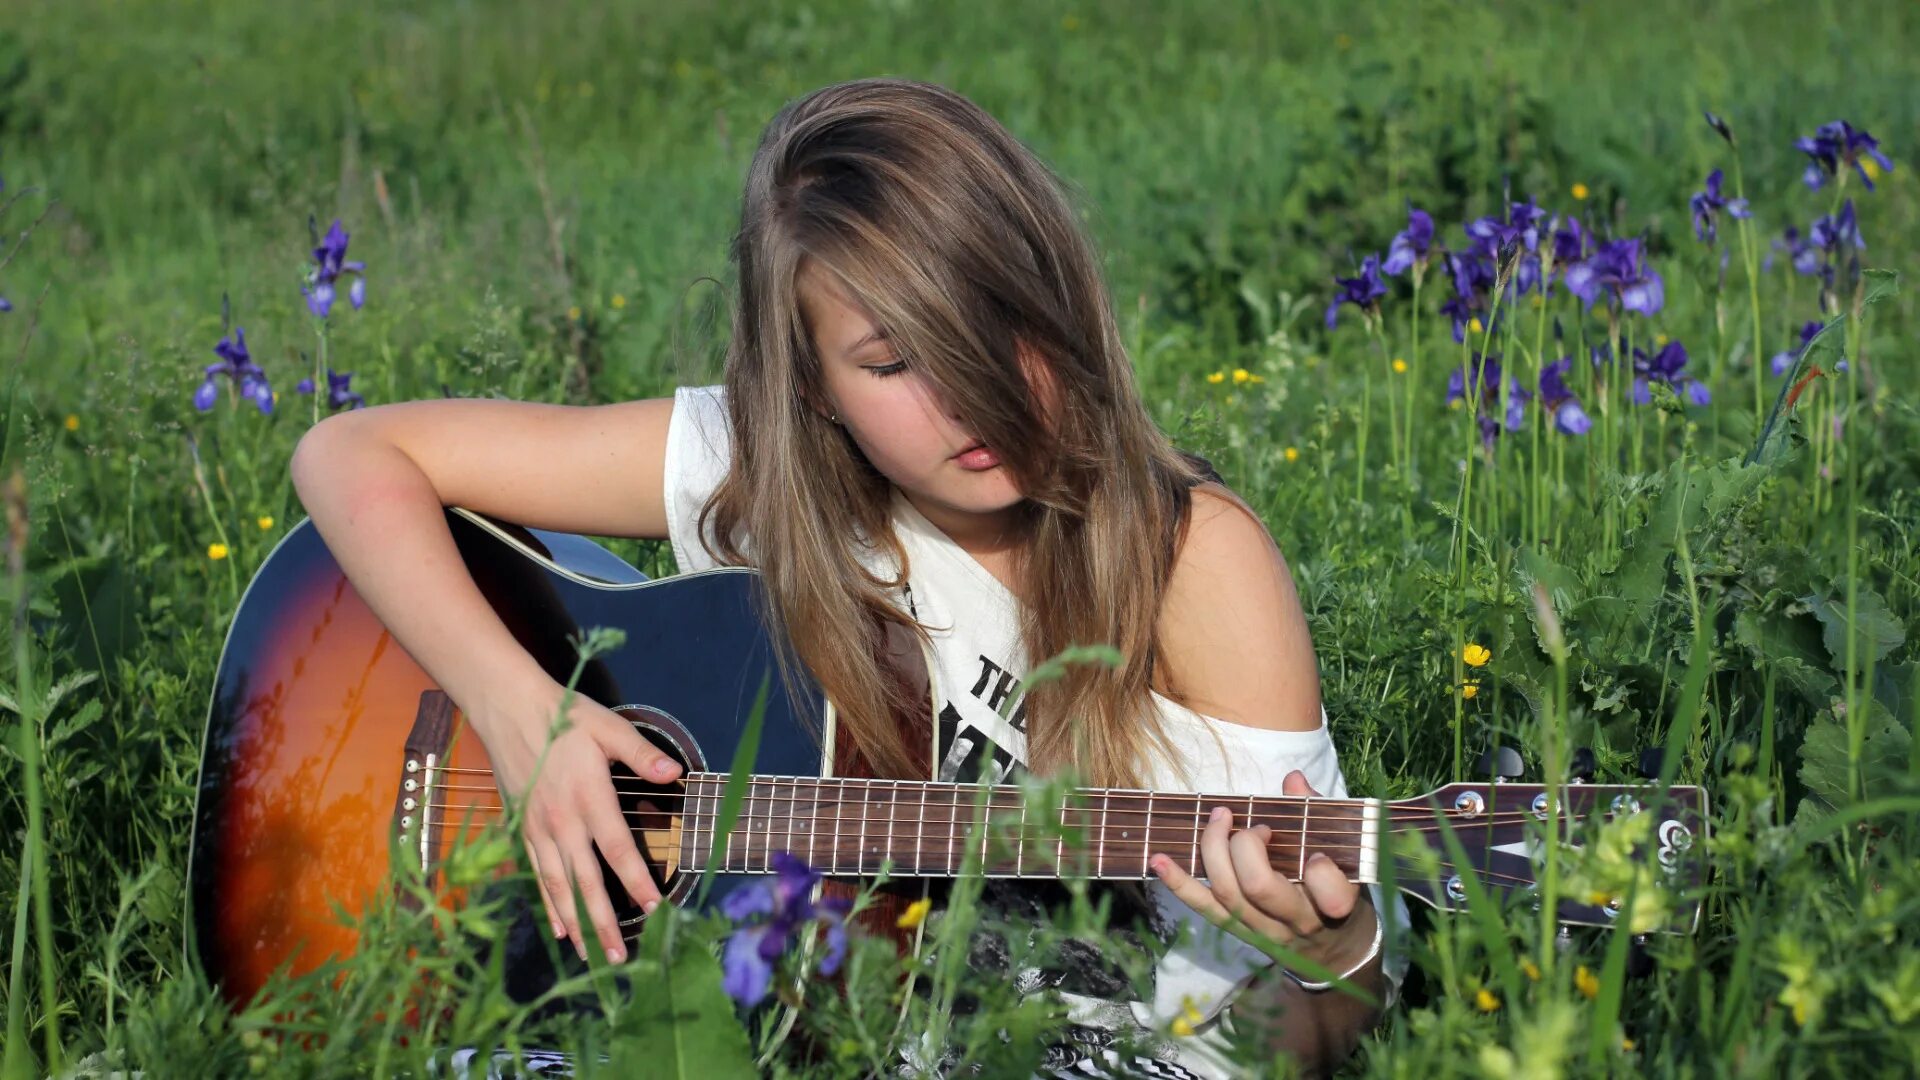 Фотосессия с гитарой на природе. Девочка. Девушка с гитарой на природе. Девочки подростки на природе. Девушка играет на гитаре песни